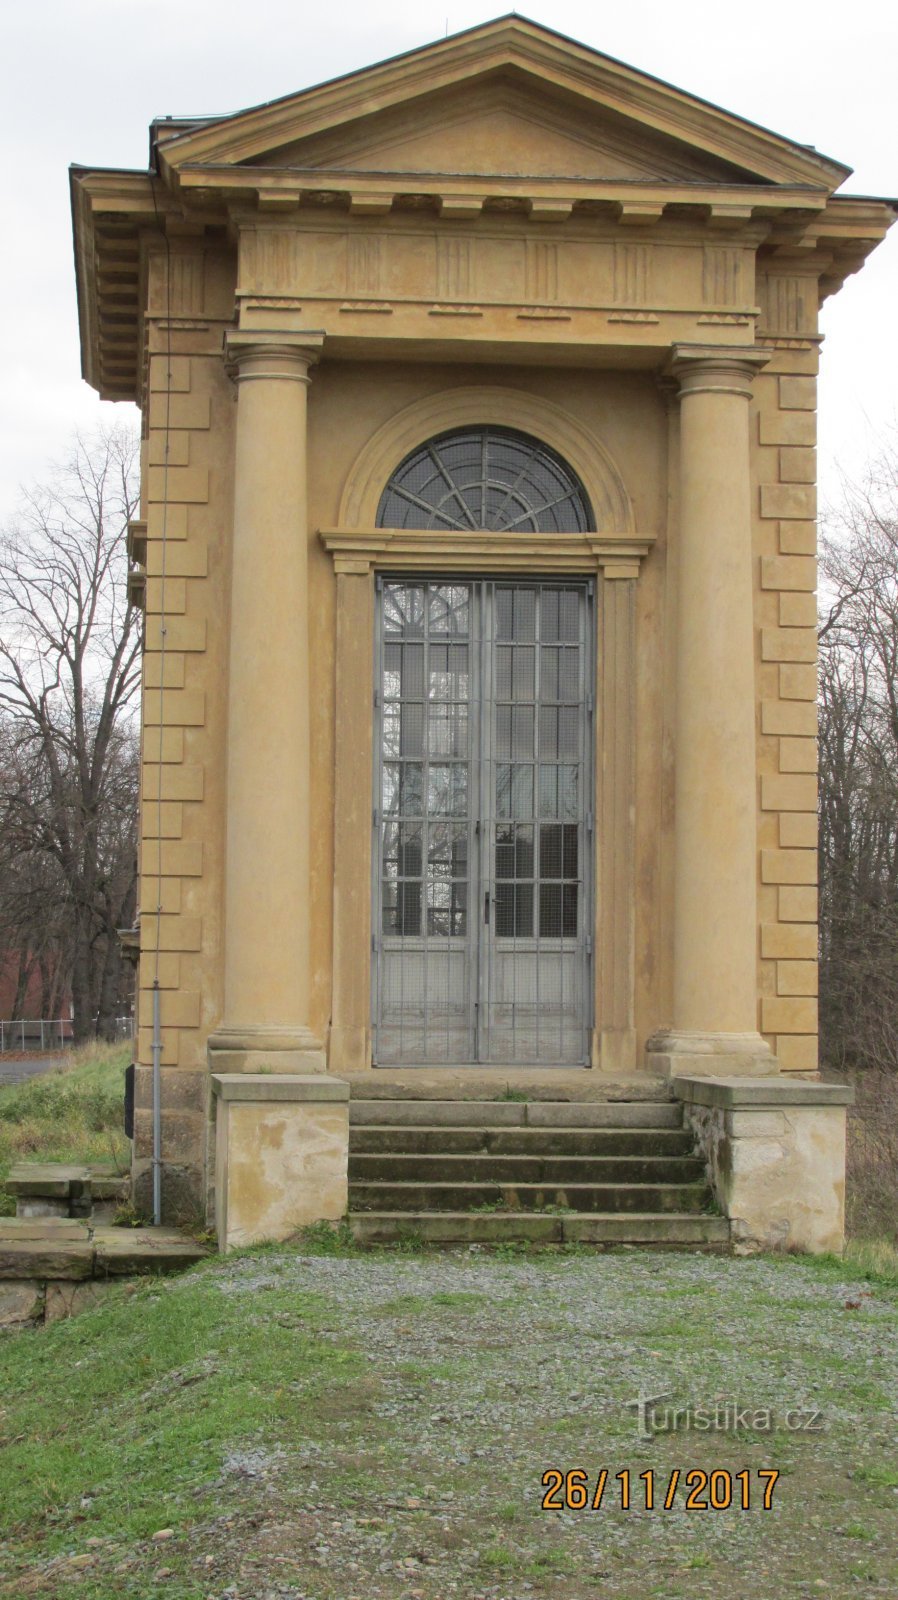 Laudons pavillon på Veltrusy-slottet